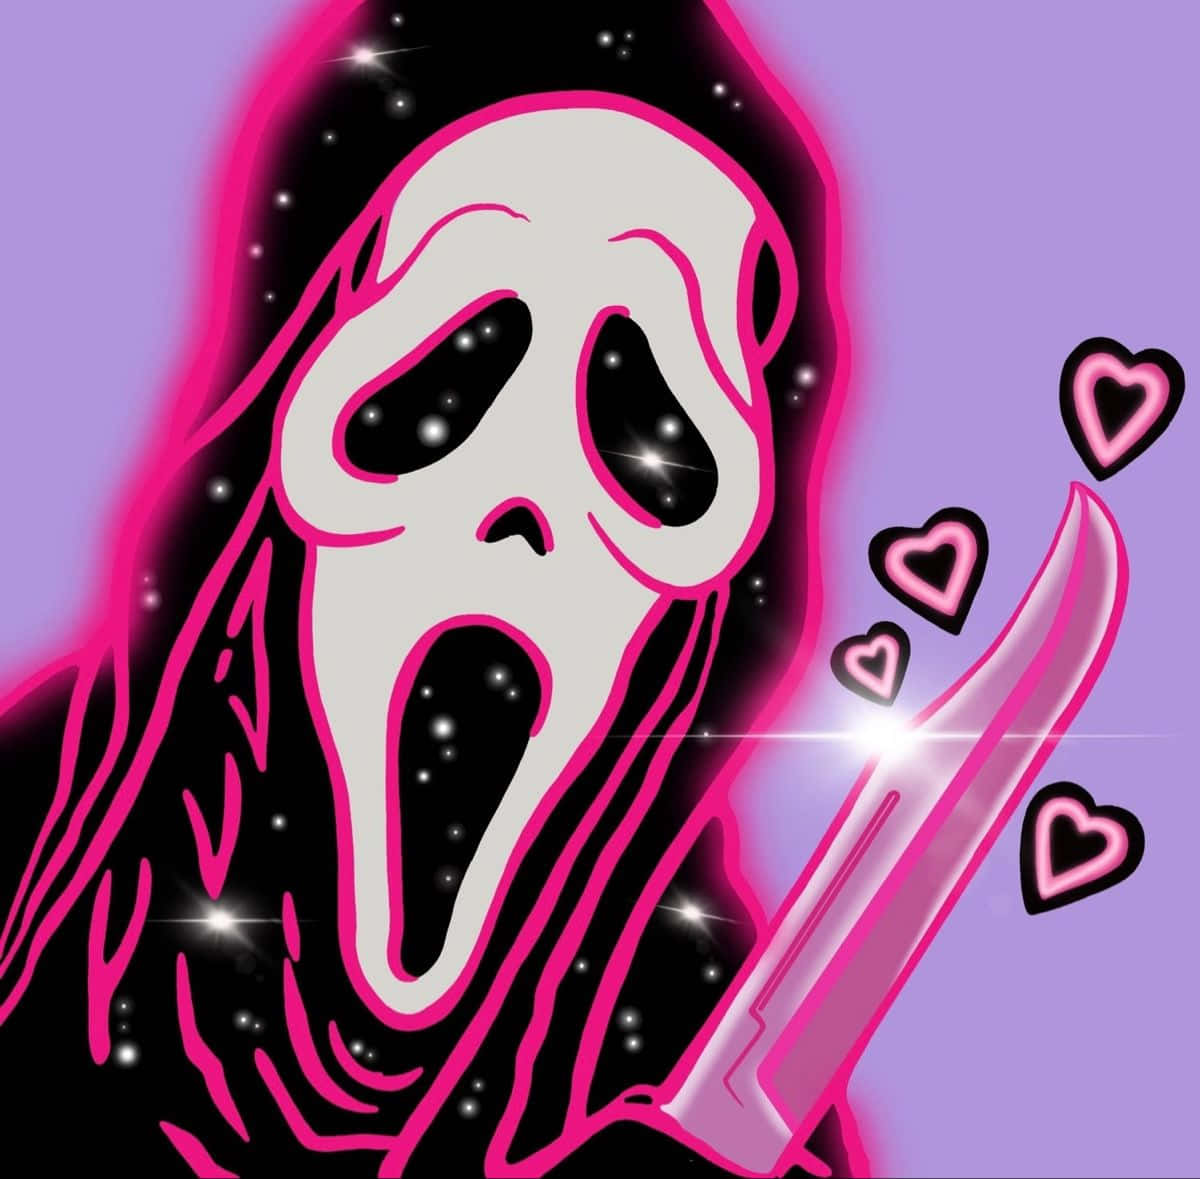 Neon Scream Love Art Wallpaper